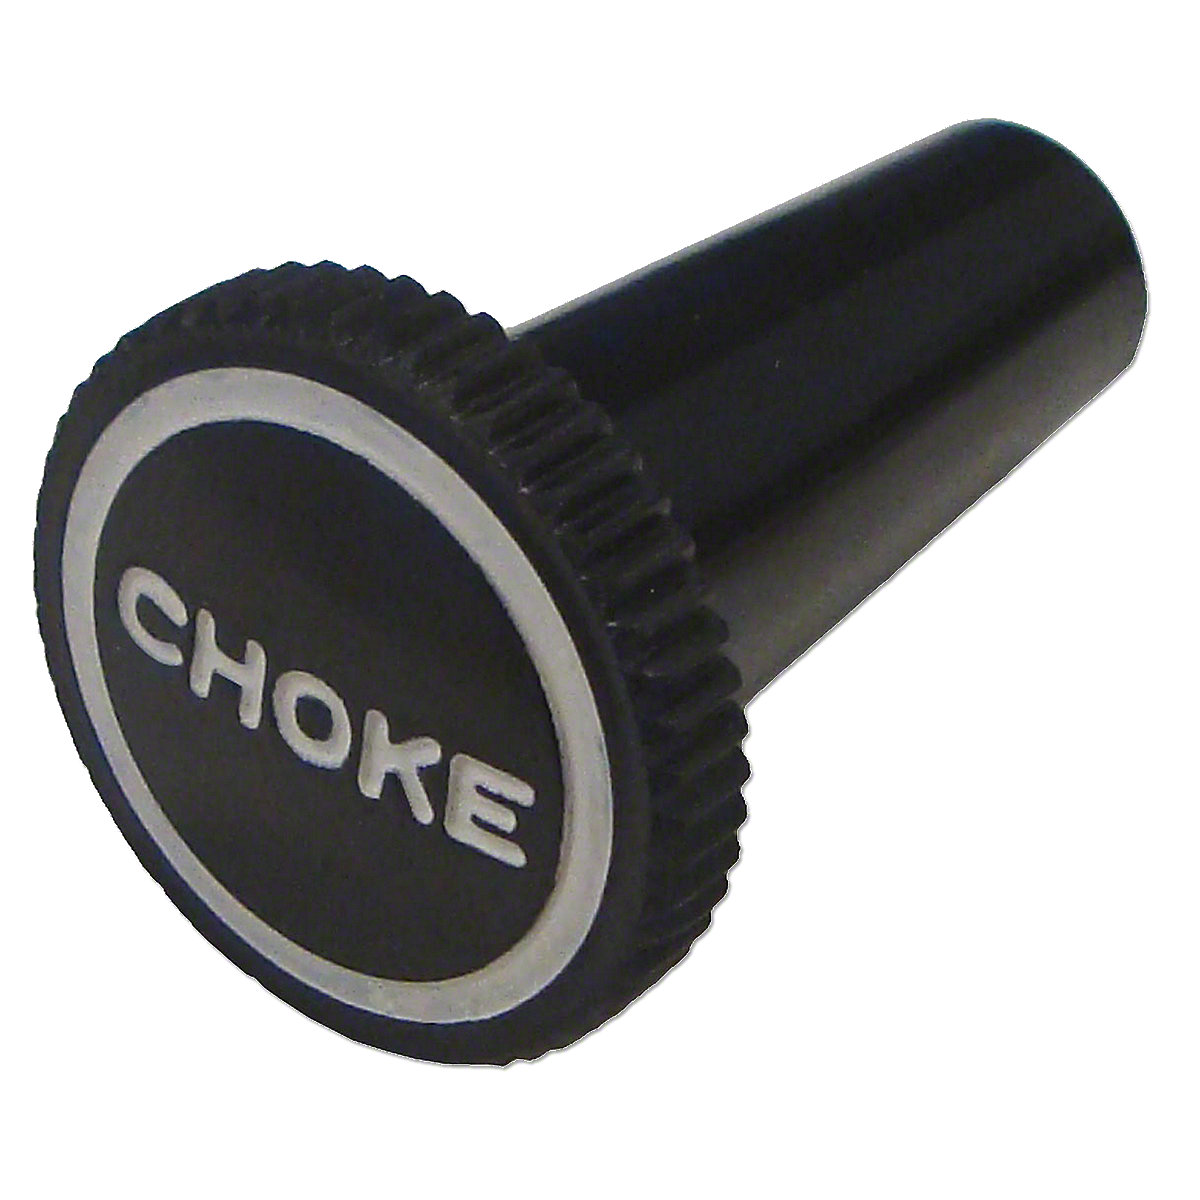 Choke Knob For Massey Harris: 50, Massey Ferguson: TO20, TO30, 65, 85, 88, 90, 35, 40, 50.